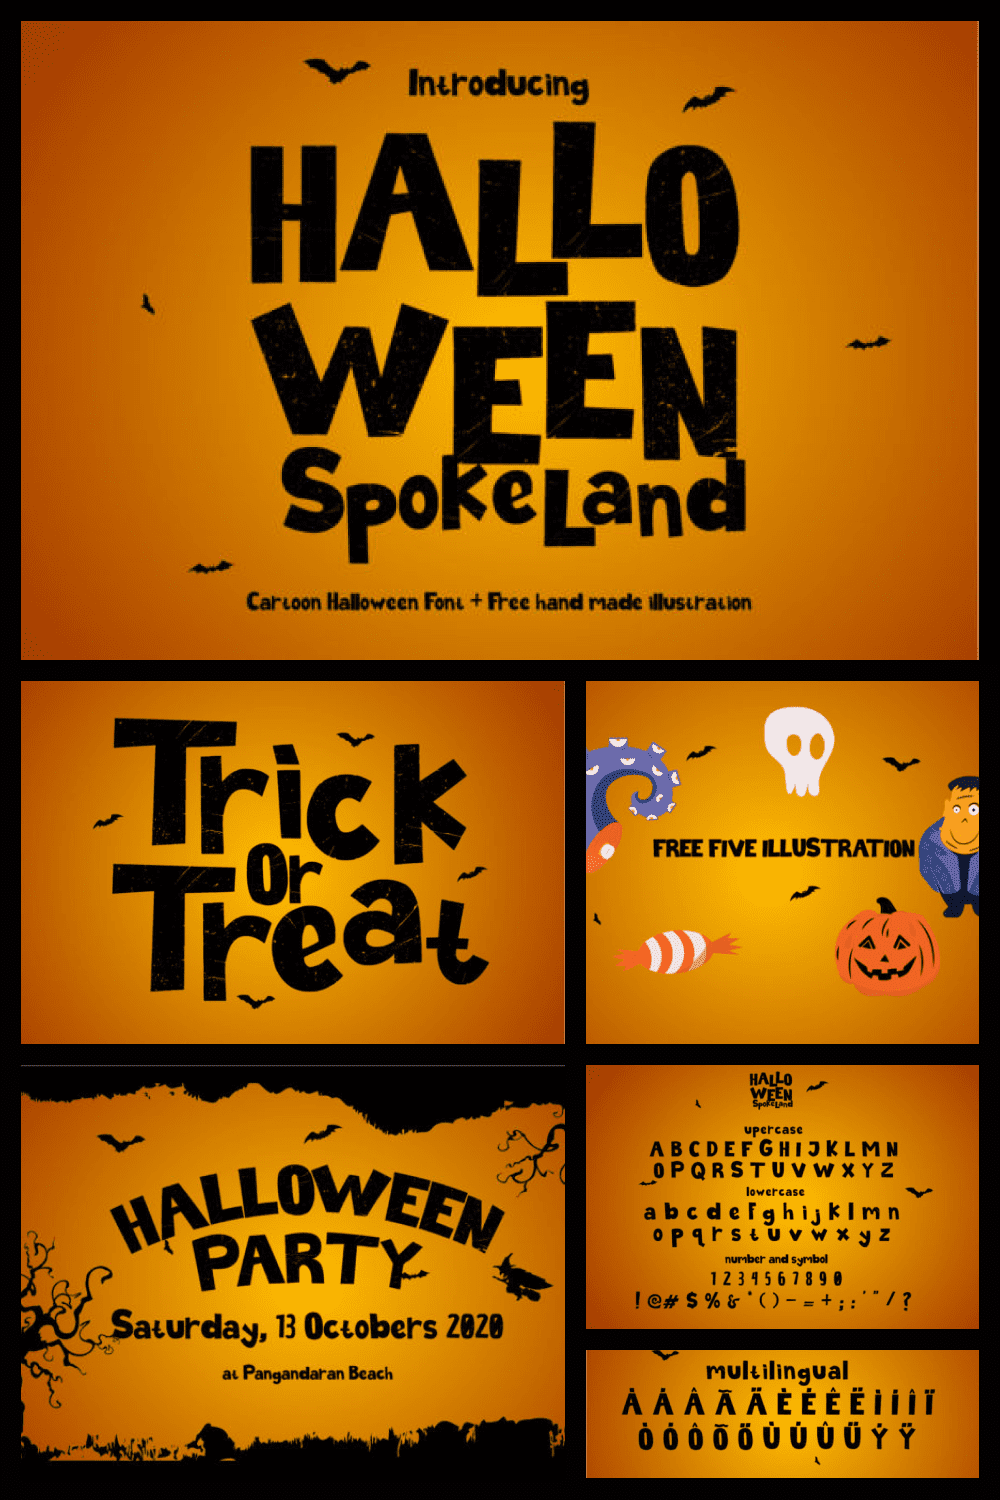 Halloween Spokeland Font - MasterBundles - Pinterest Collage Image.